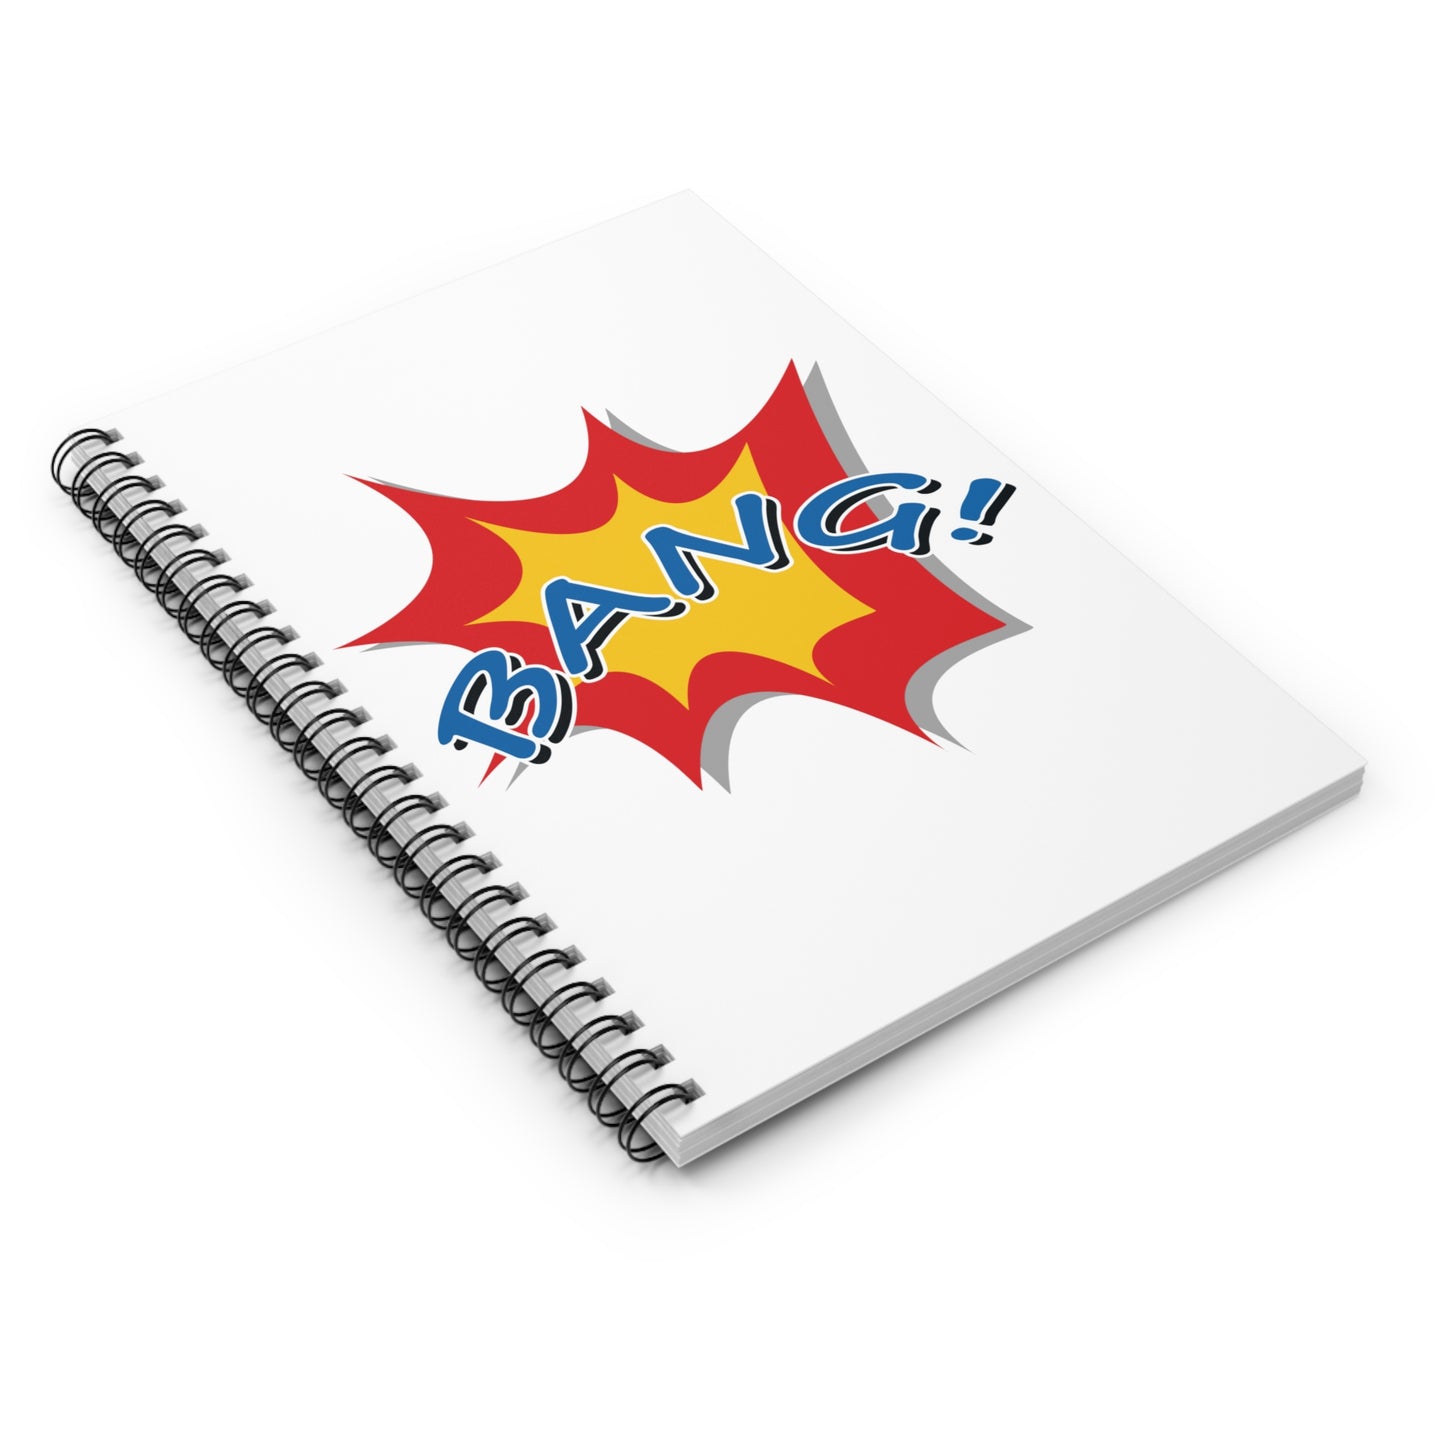 Superhero BANG: Spiral Notebook - Log Books - Journals - Diaries - and More Custom Printed by TheGlassyLass